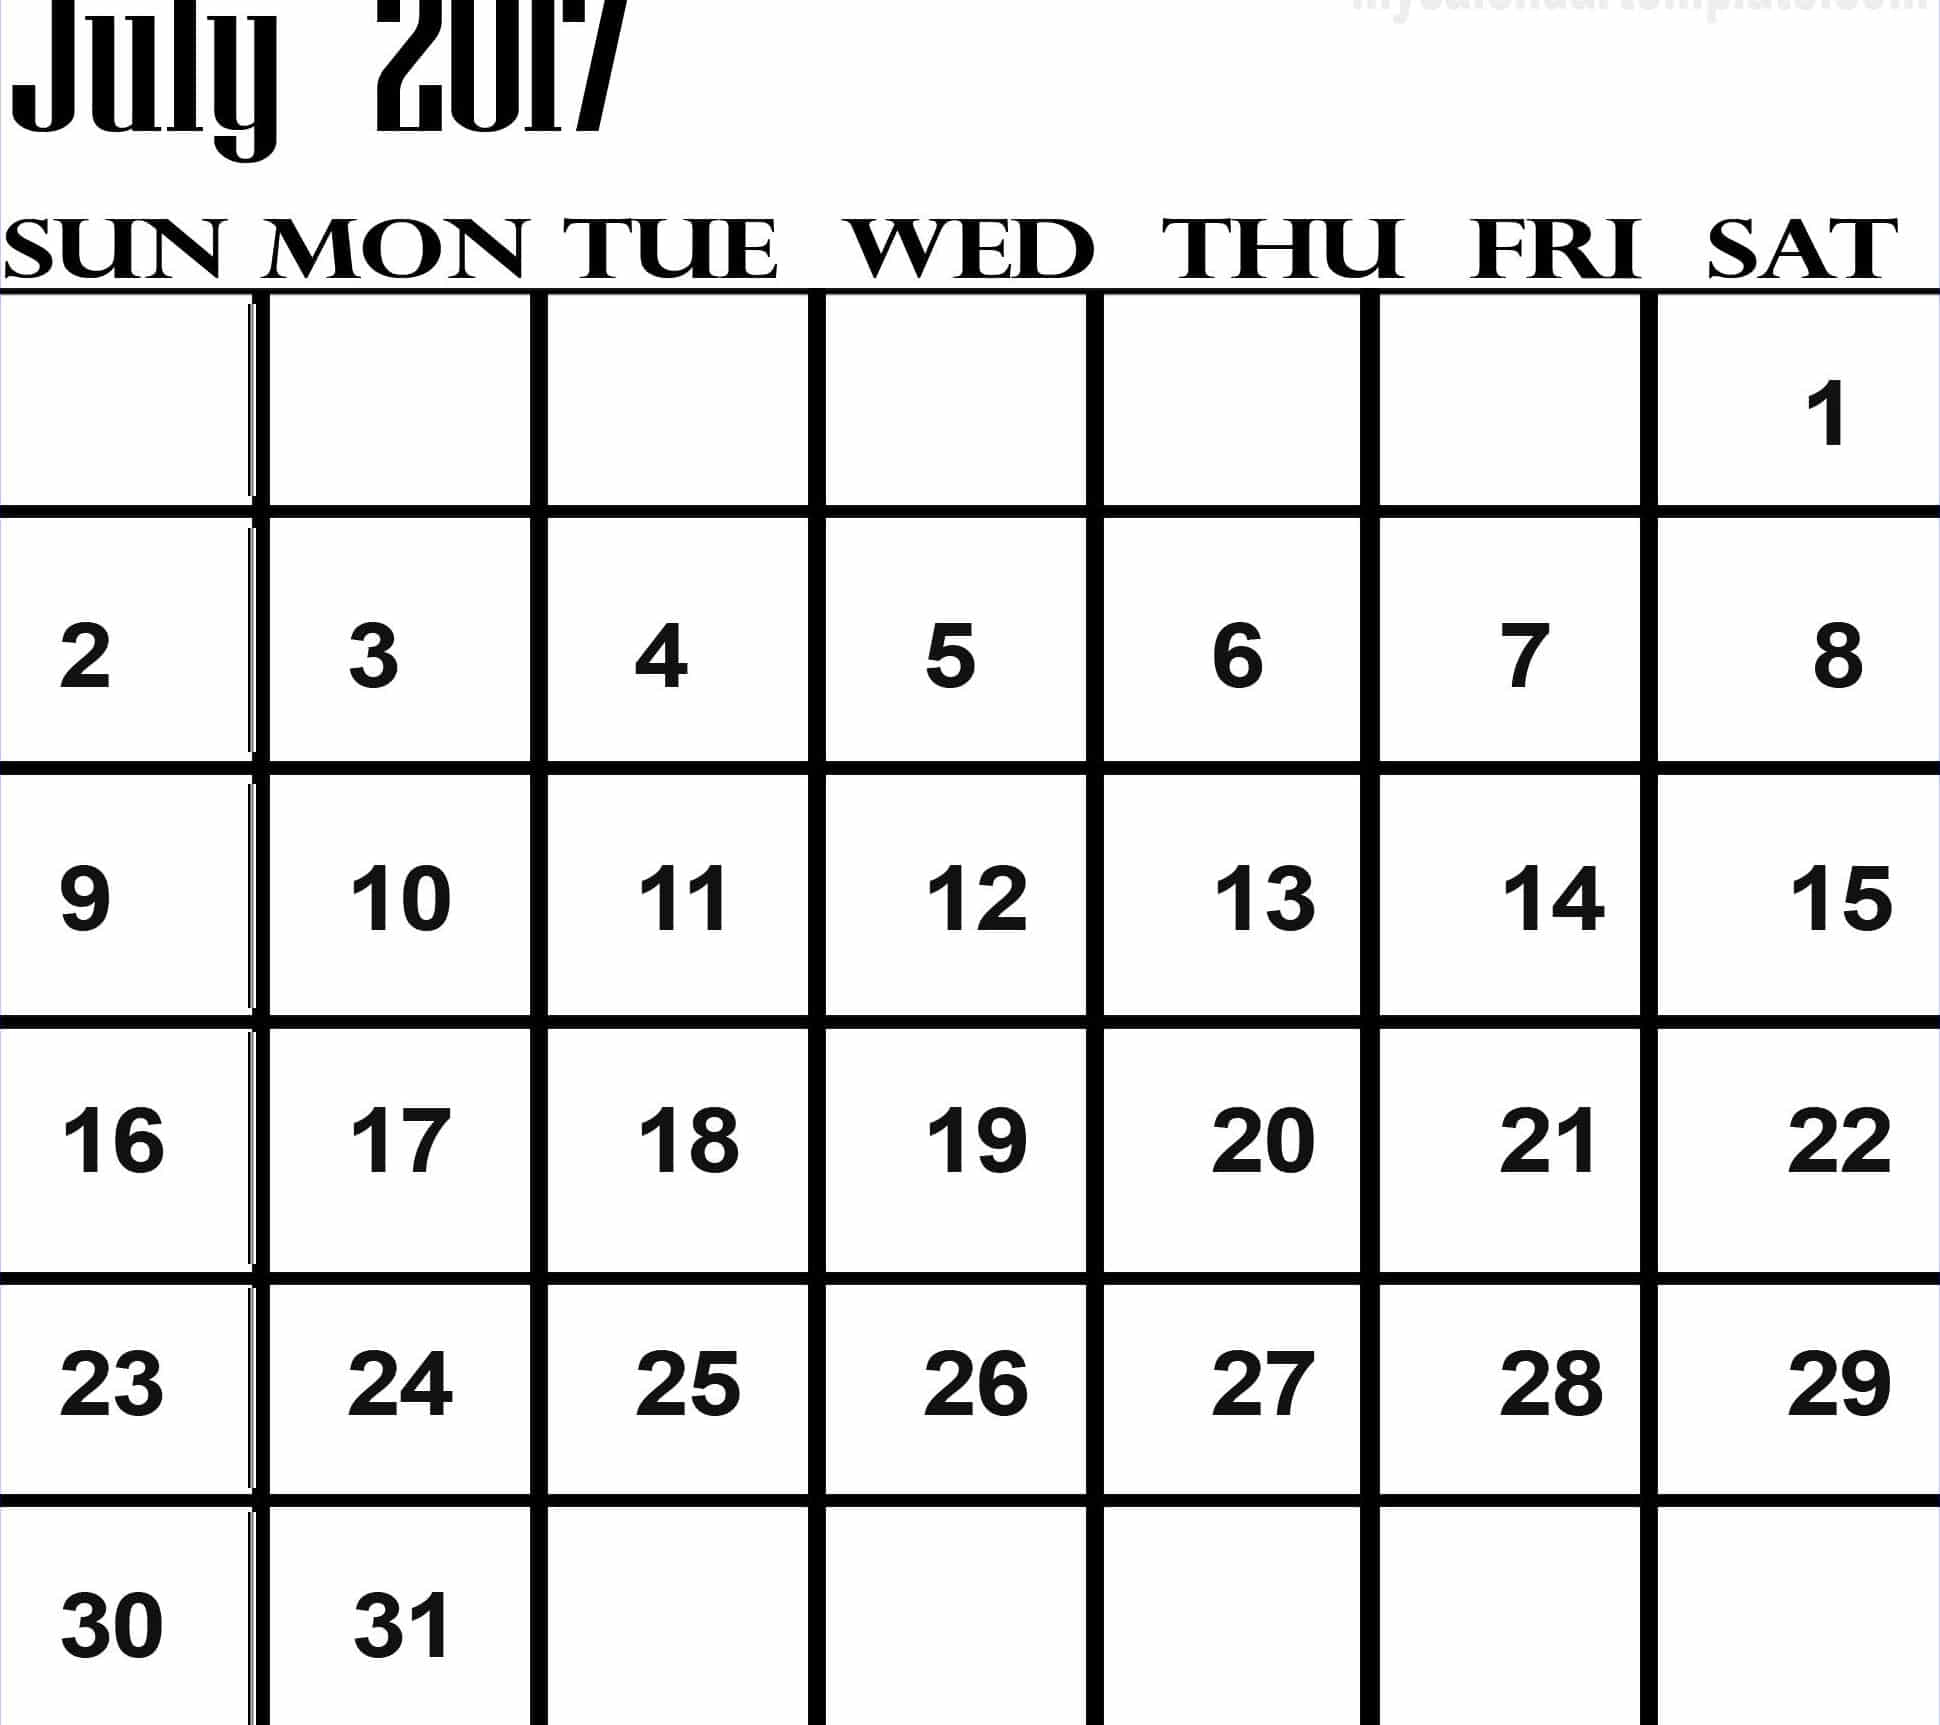 download-july-2017-calendar-image-oppidan-library